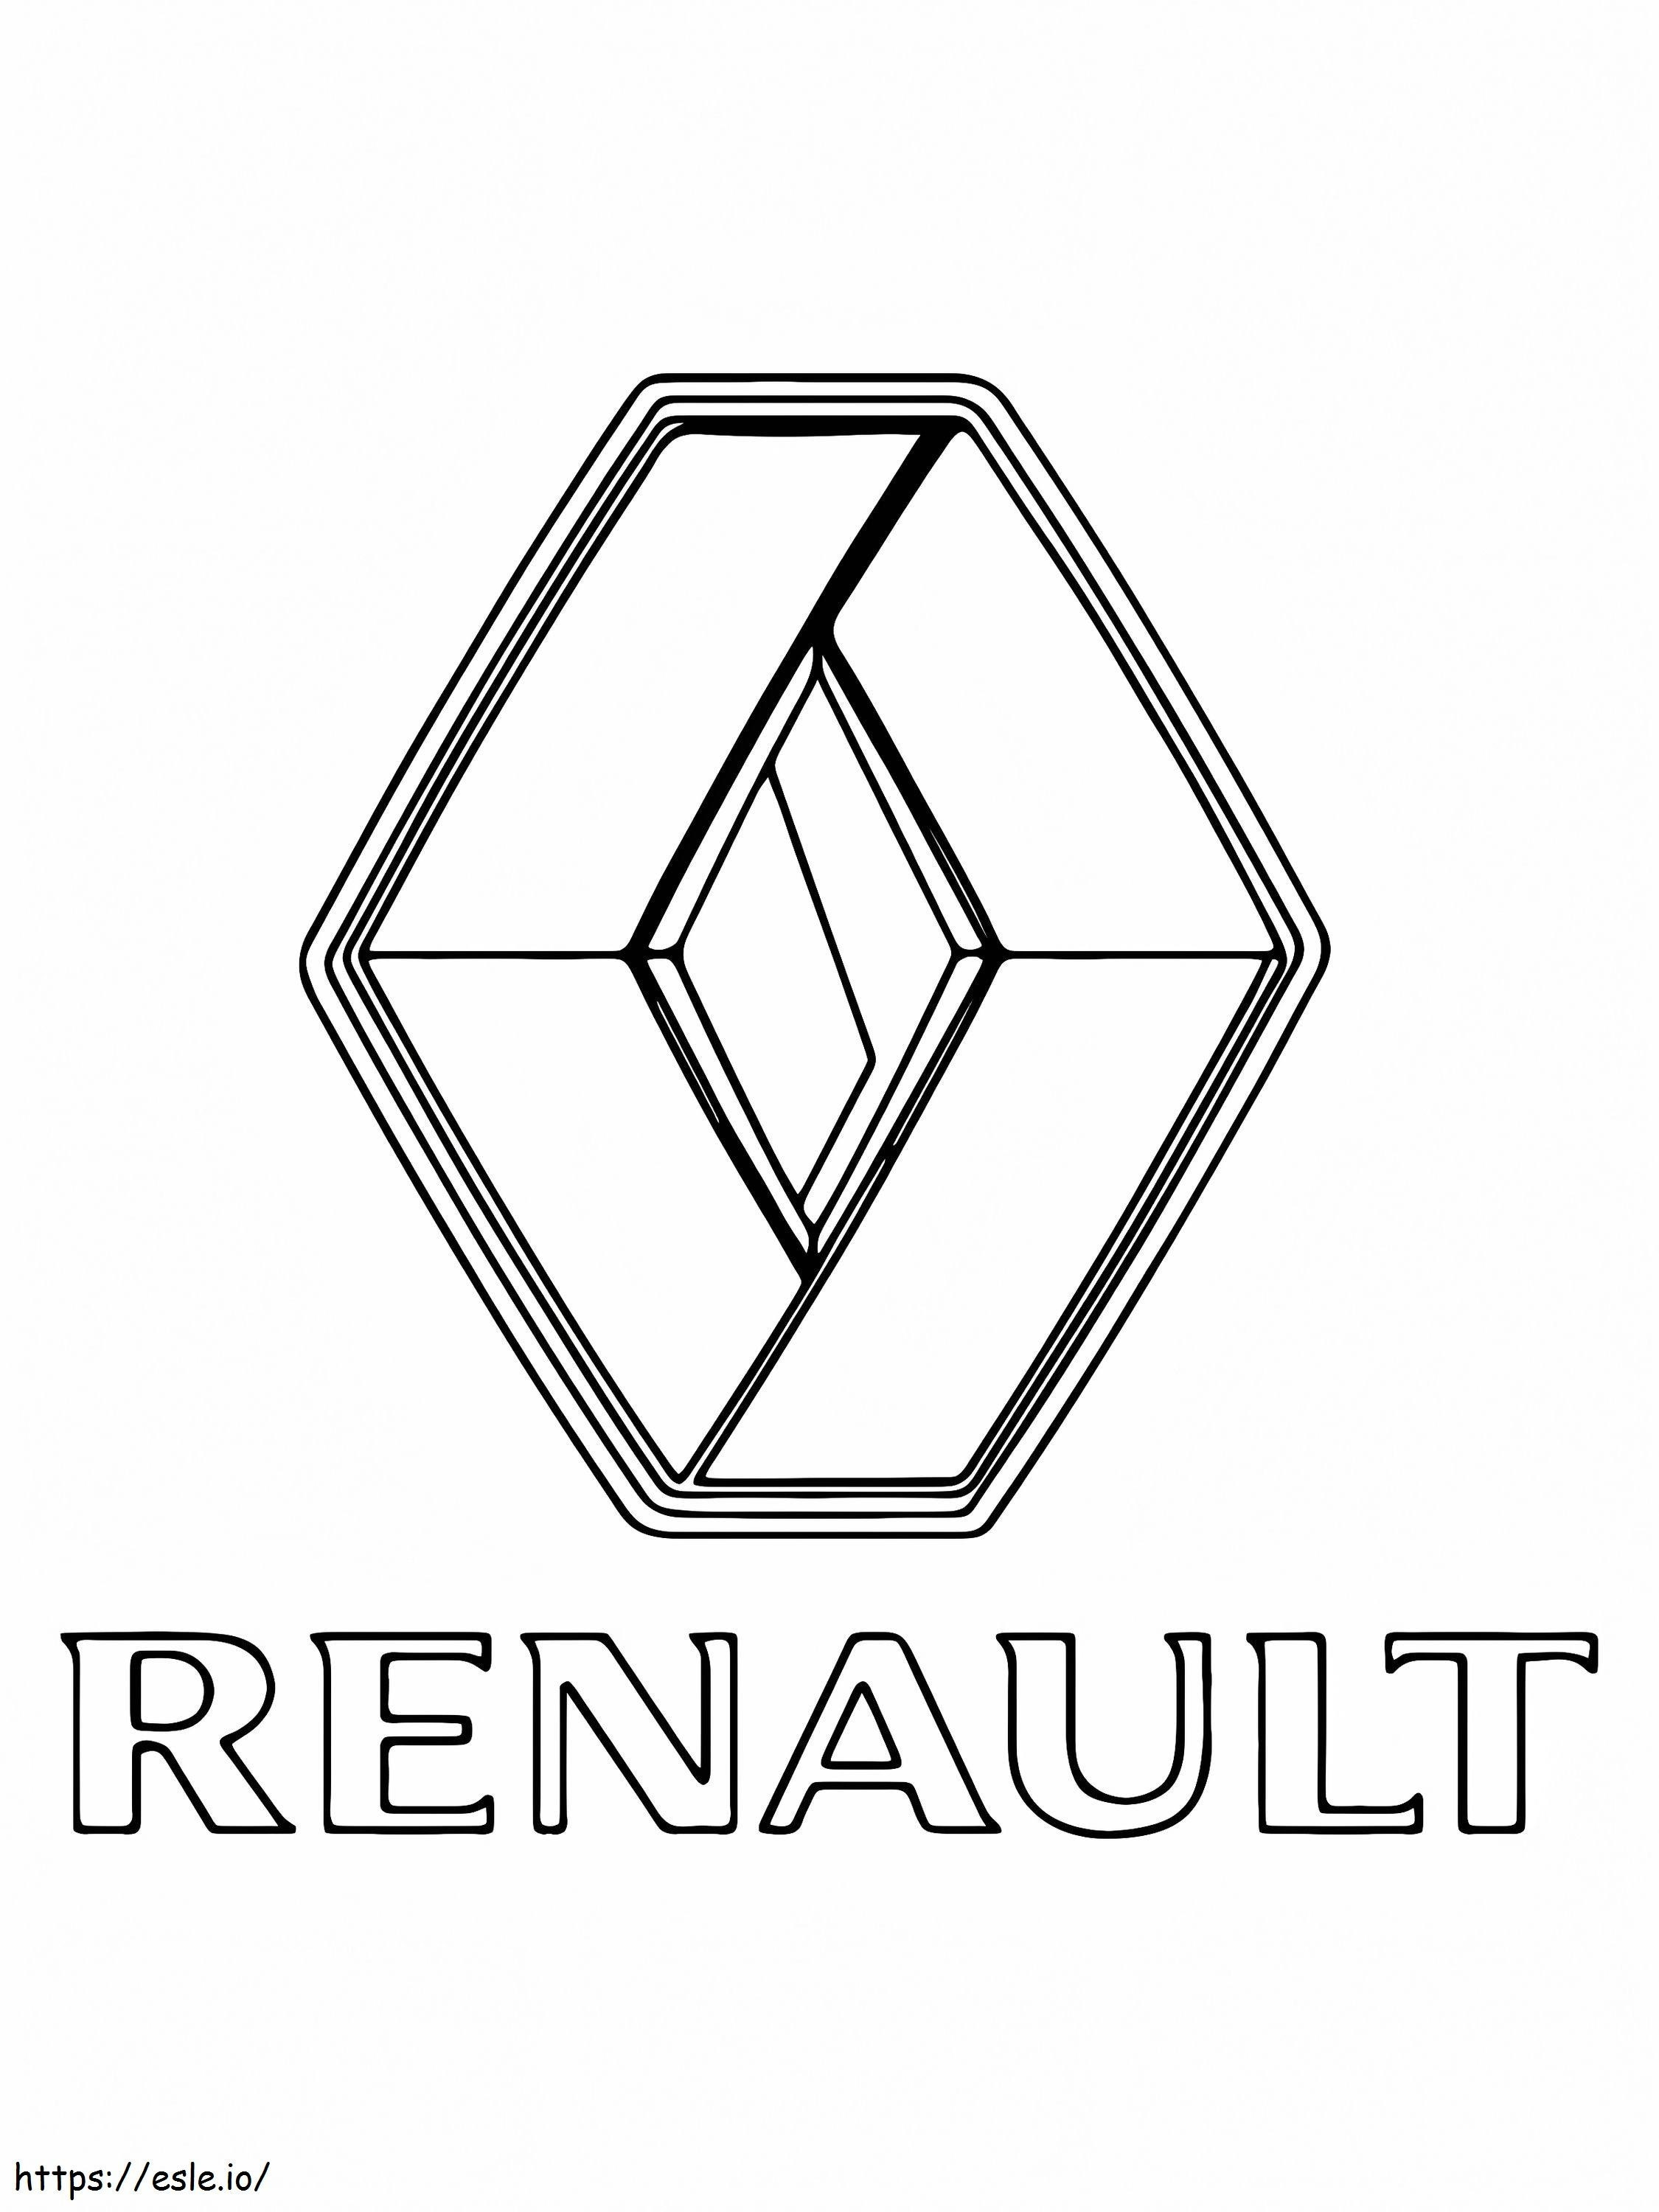 Renault Car Logo coloring page